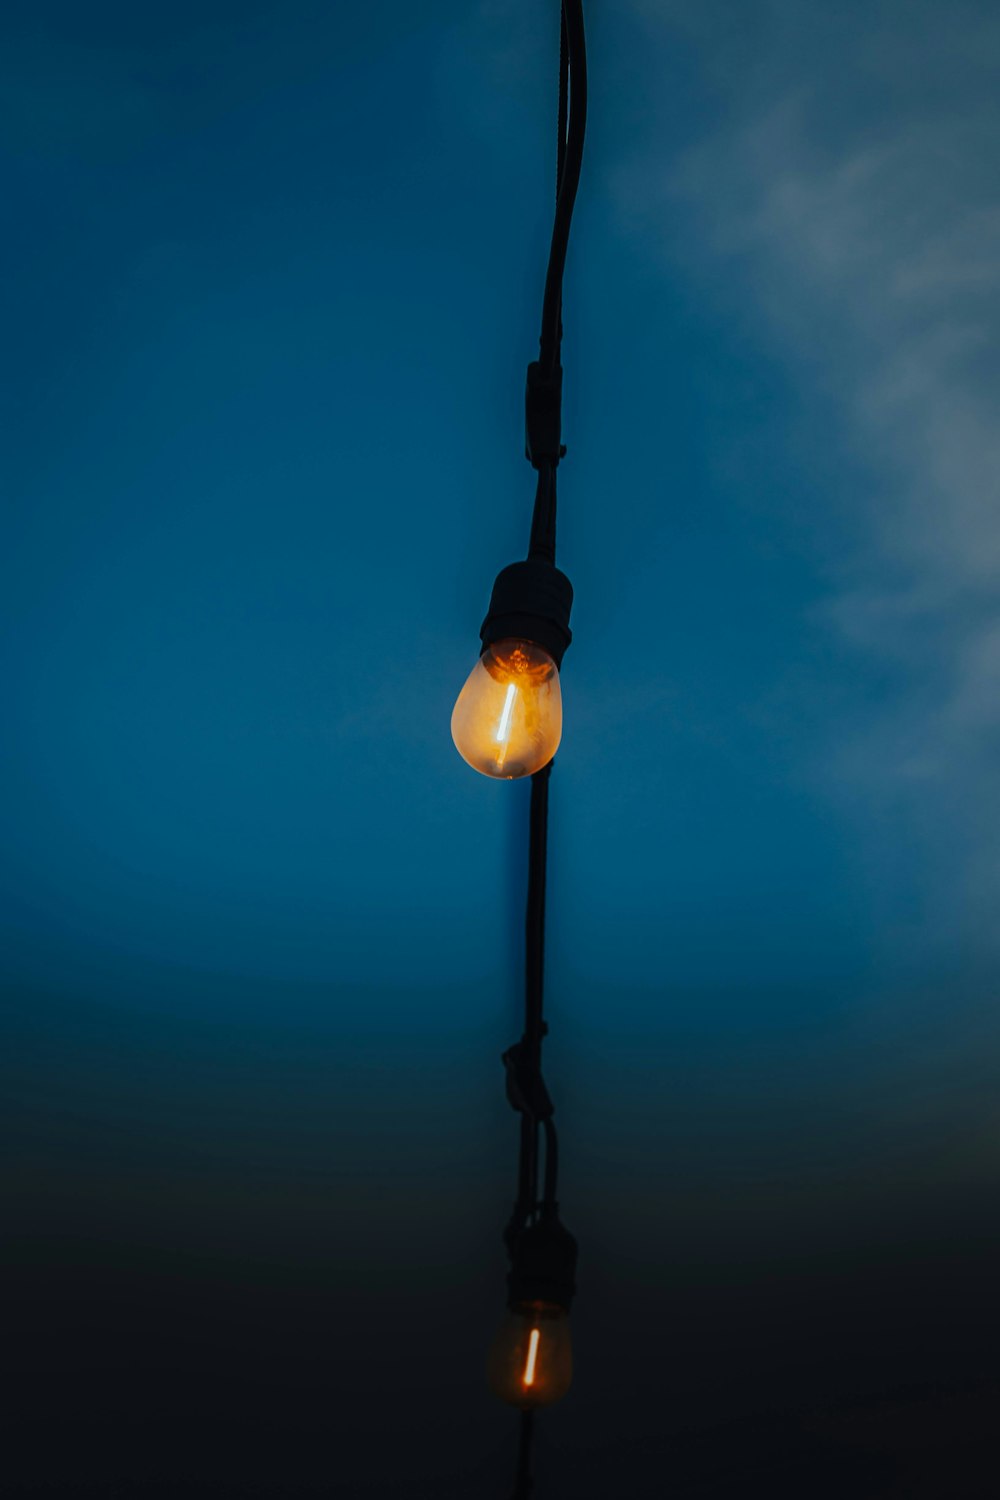 a light on a pole